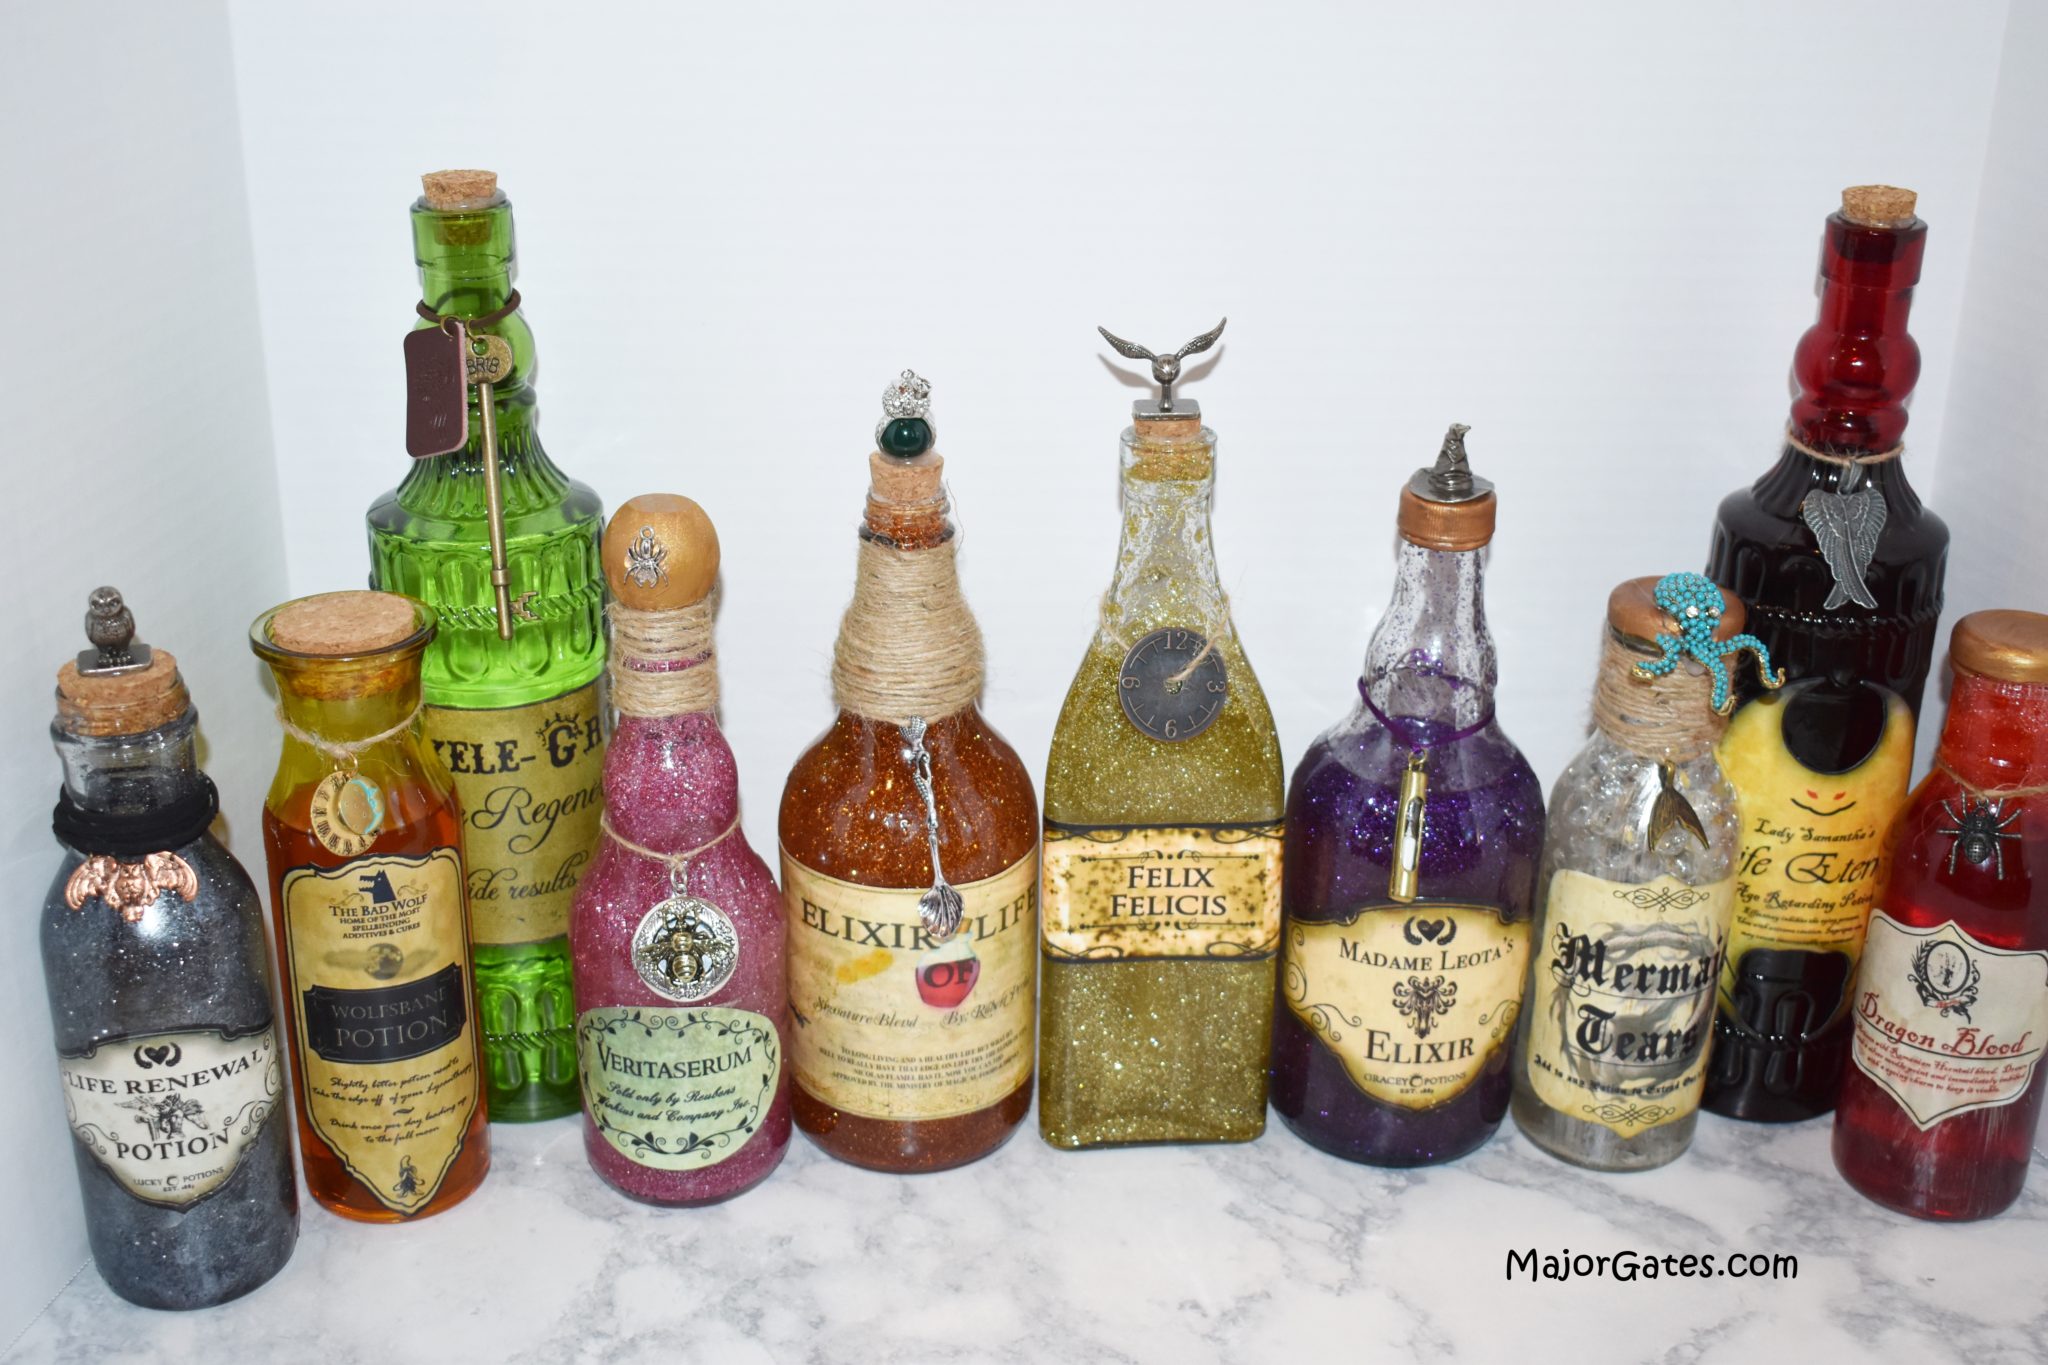 harry potter potion bottles